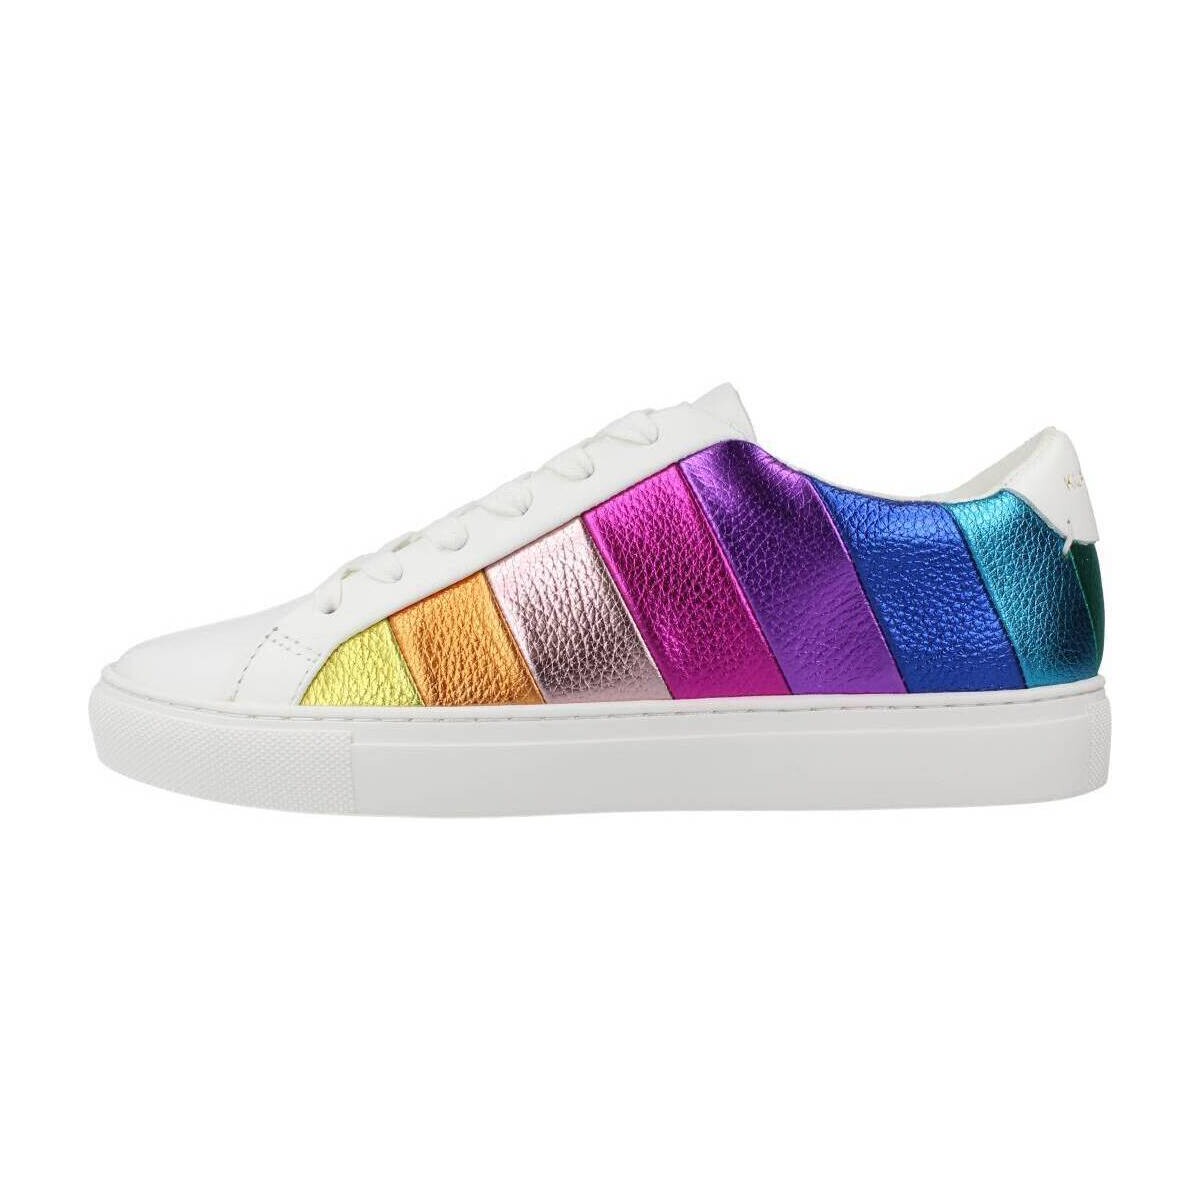 Pantofi Femei Sneakers Kurt Geiger London LANE STRIPE Multicolor